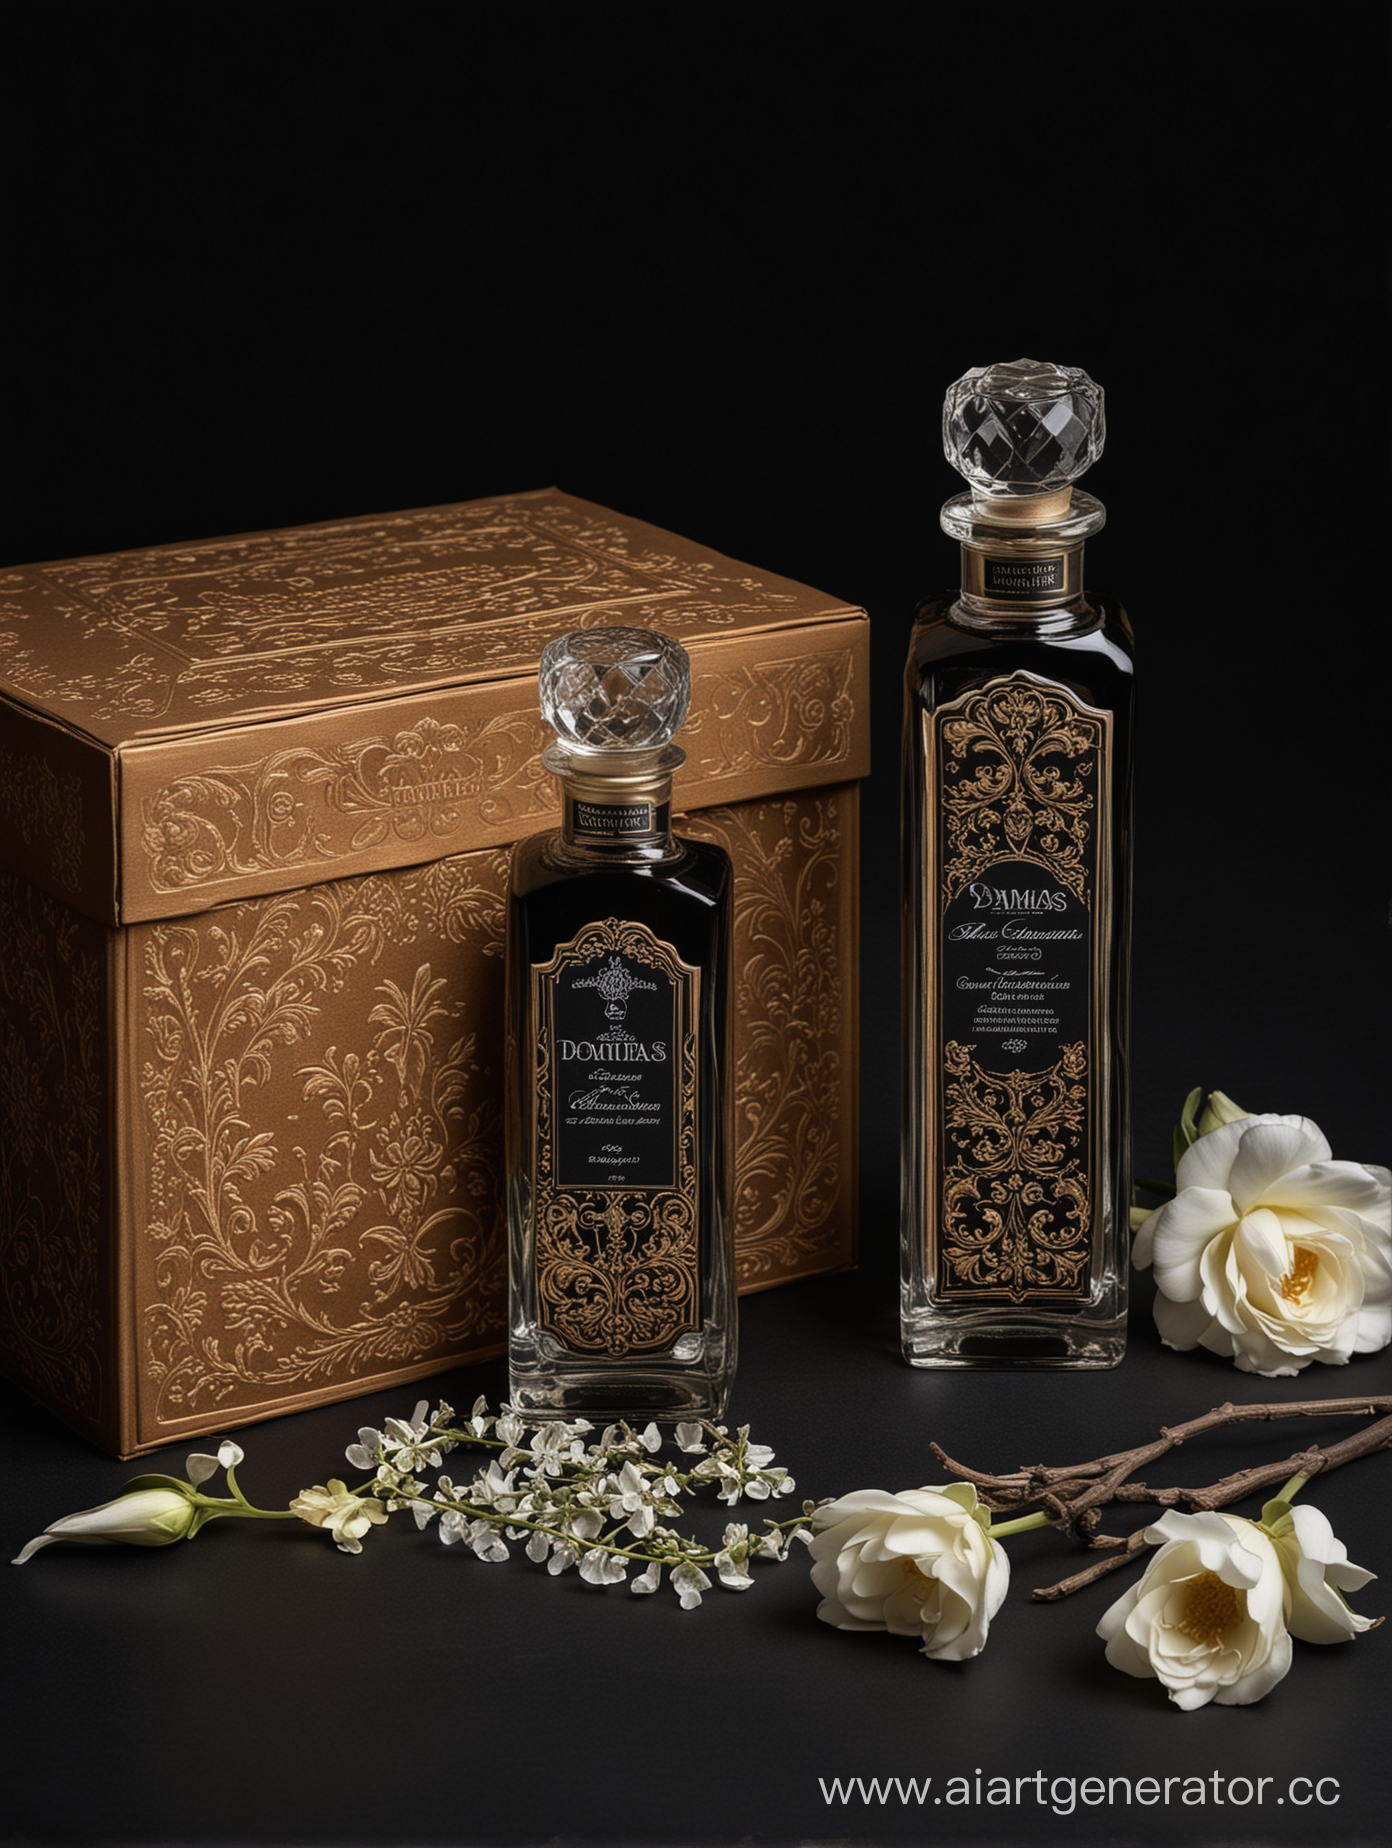 a bottle of damas cologne sitting next to a box, a flemish Baroque by Demetrios Farmakopoulos, instagram contest winner, dau-al-set, dynamic composition, contest winner, feminine
black background